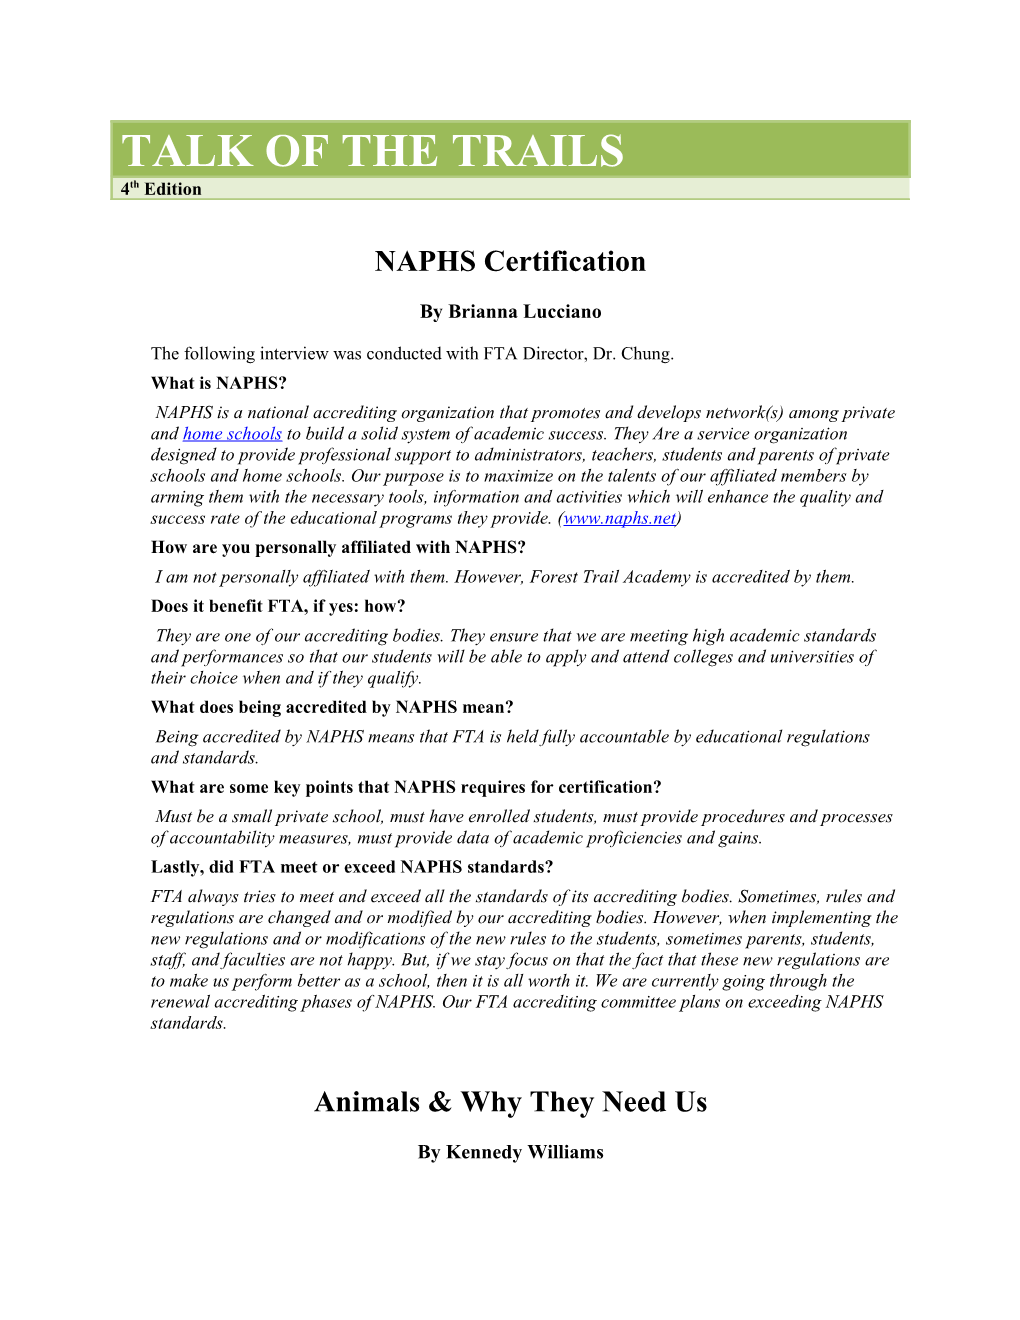 NAPHS Certification